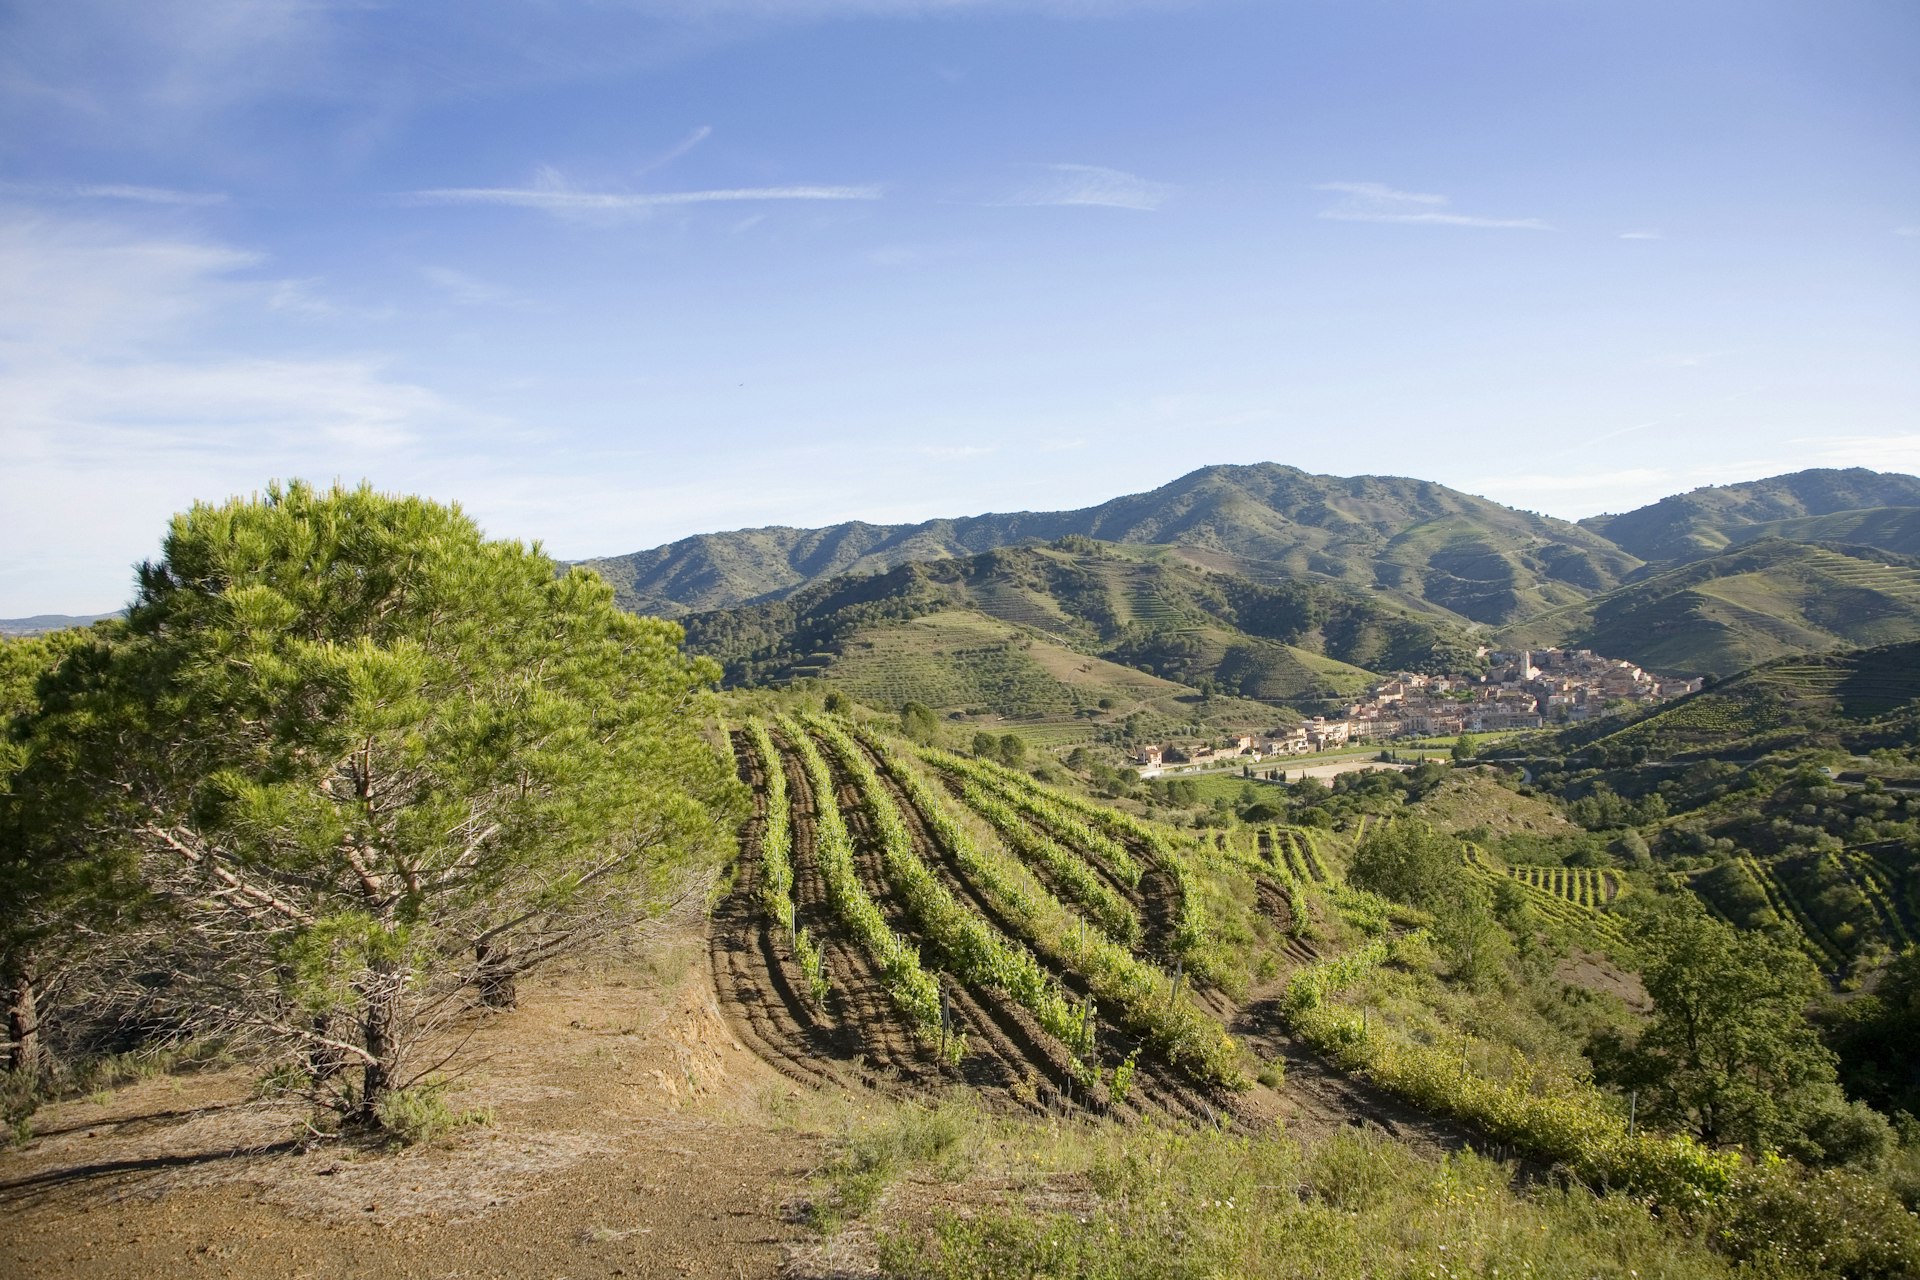 Vineyards in the hills of Priorat, Catalonia, Spain